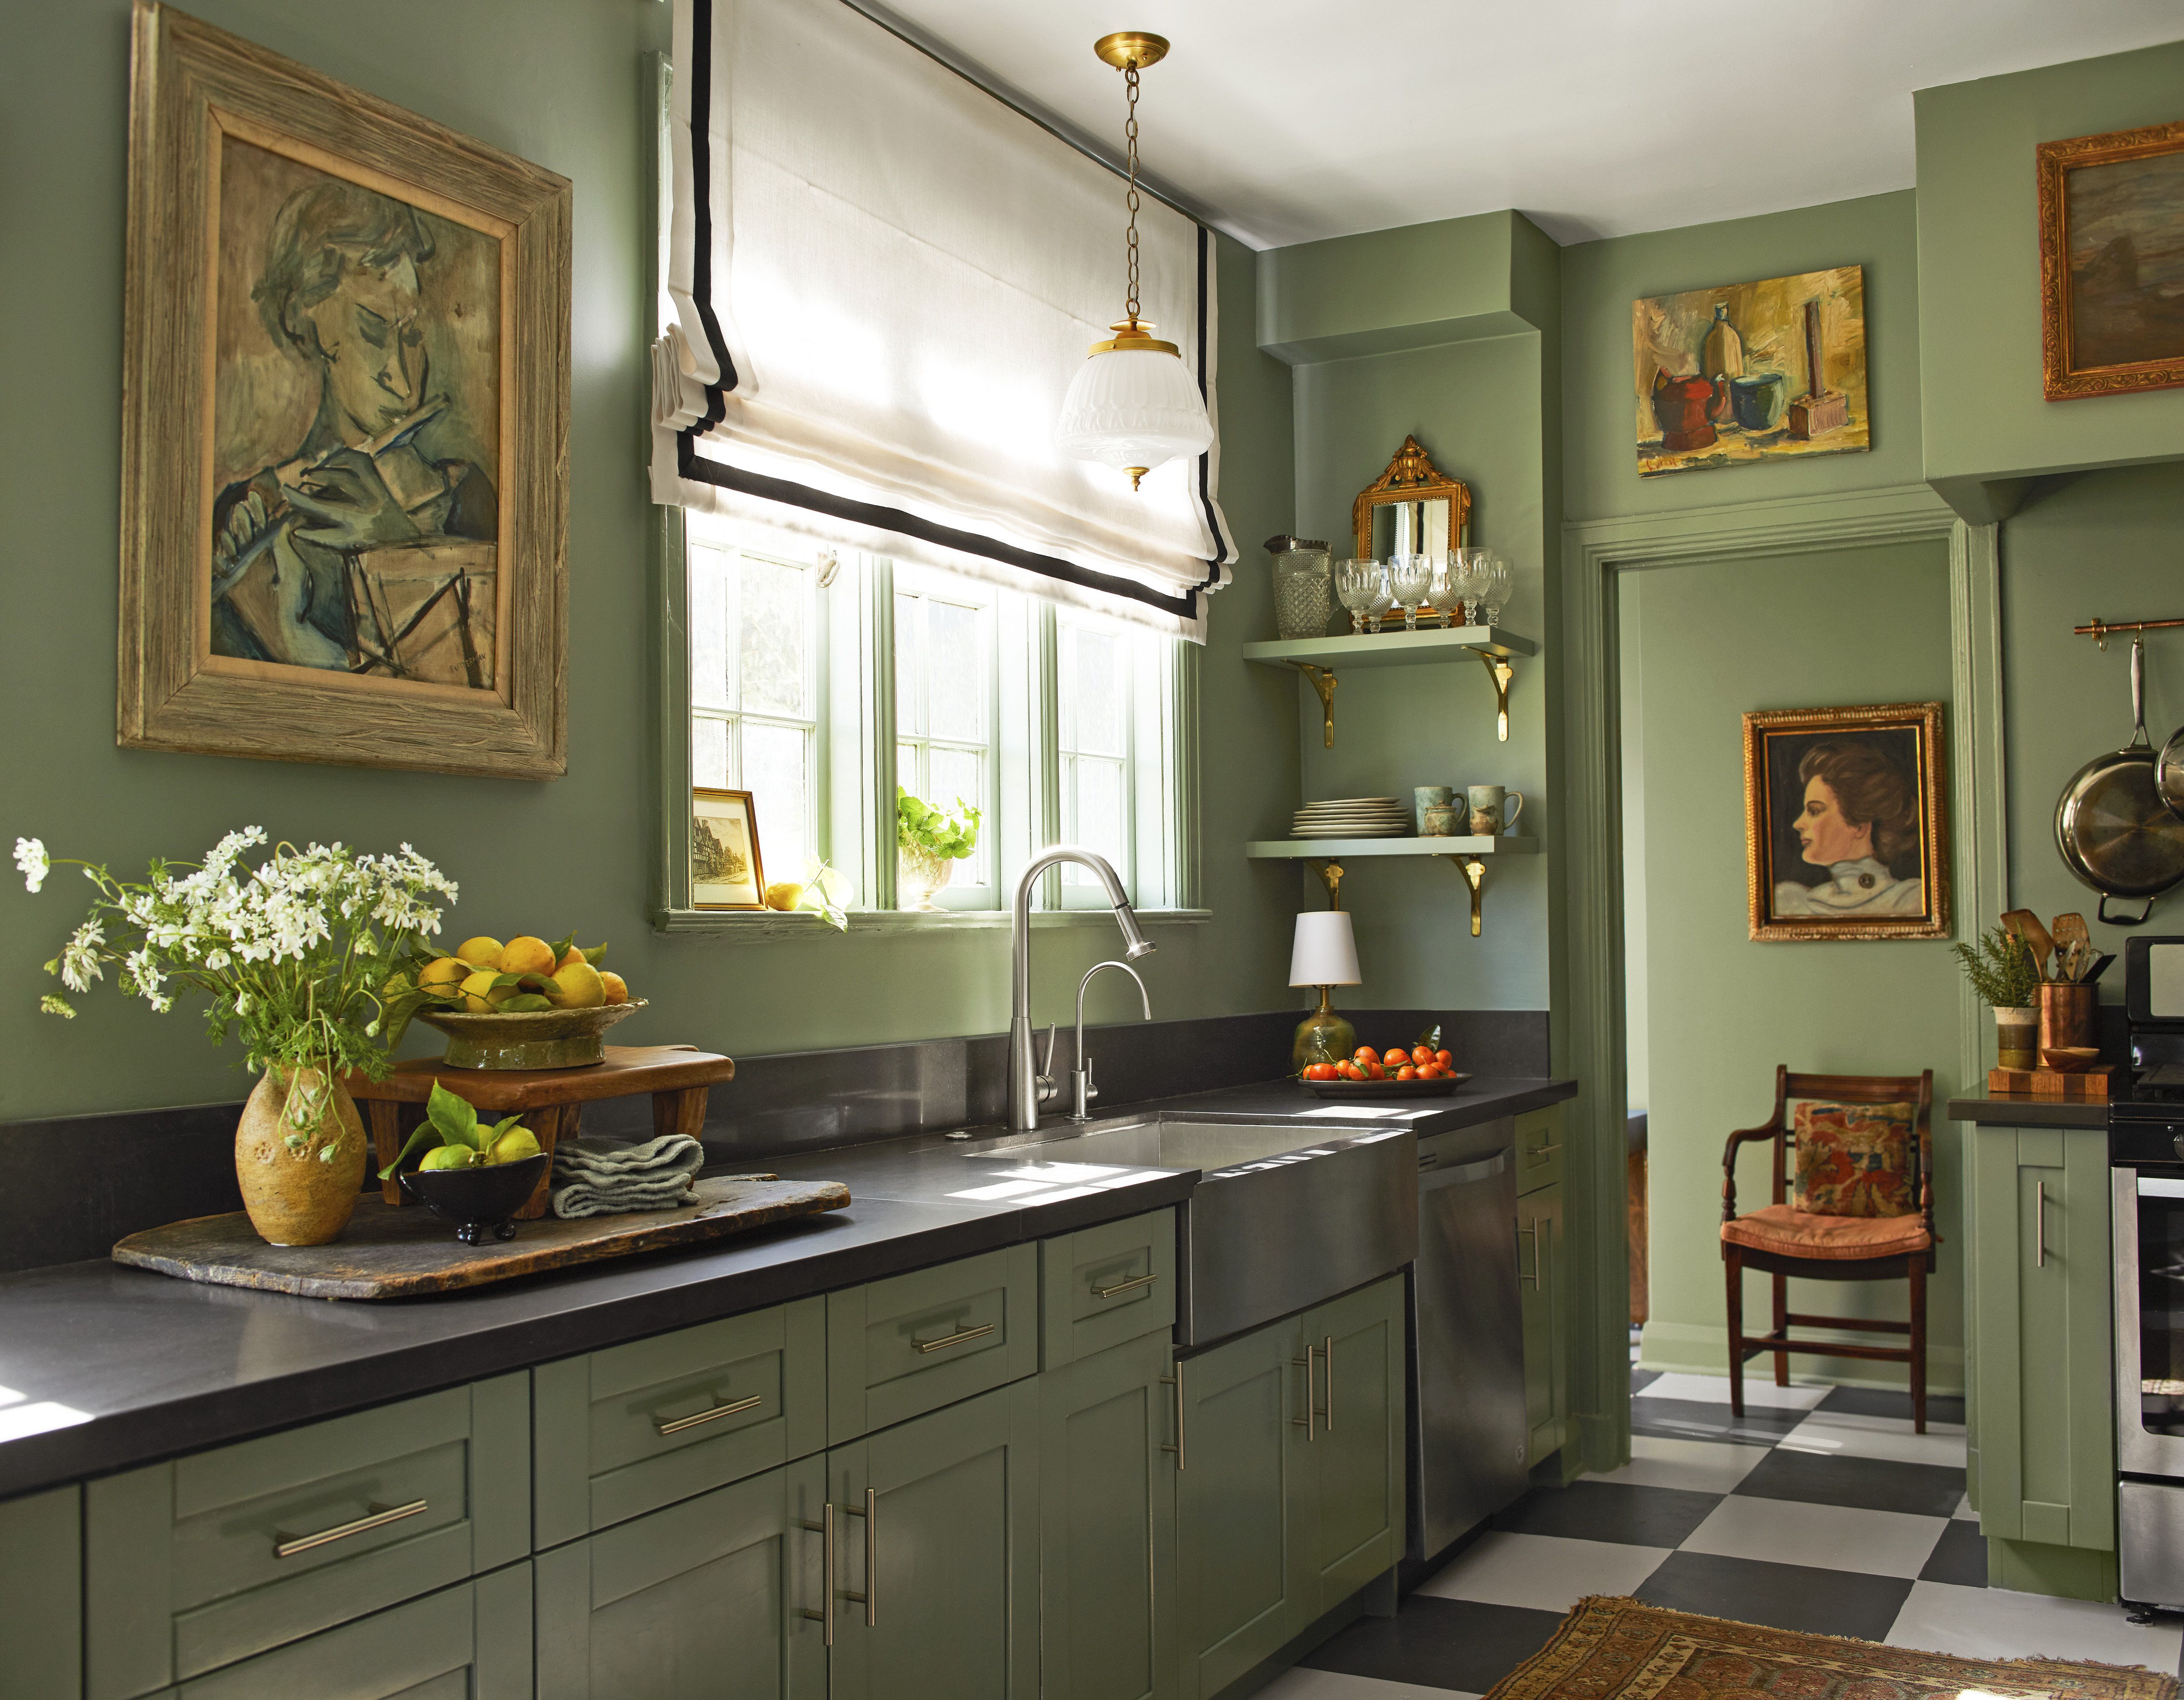 18 Best Kitchen Wall Decor Ideas   Beautiful Kitchen Decorations 18